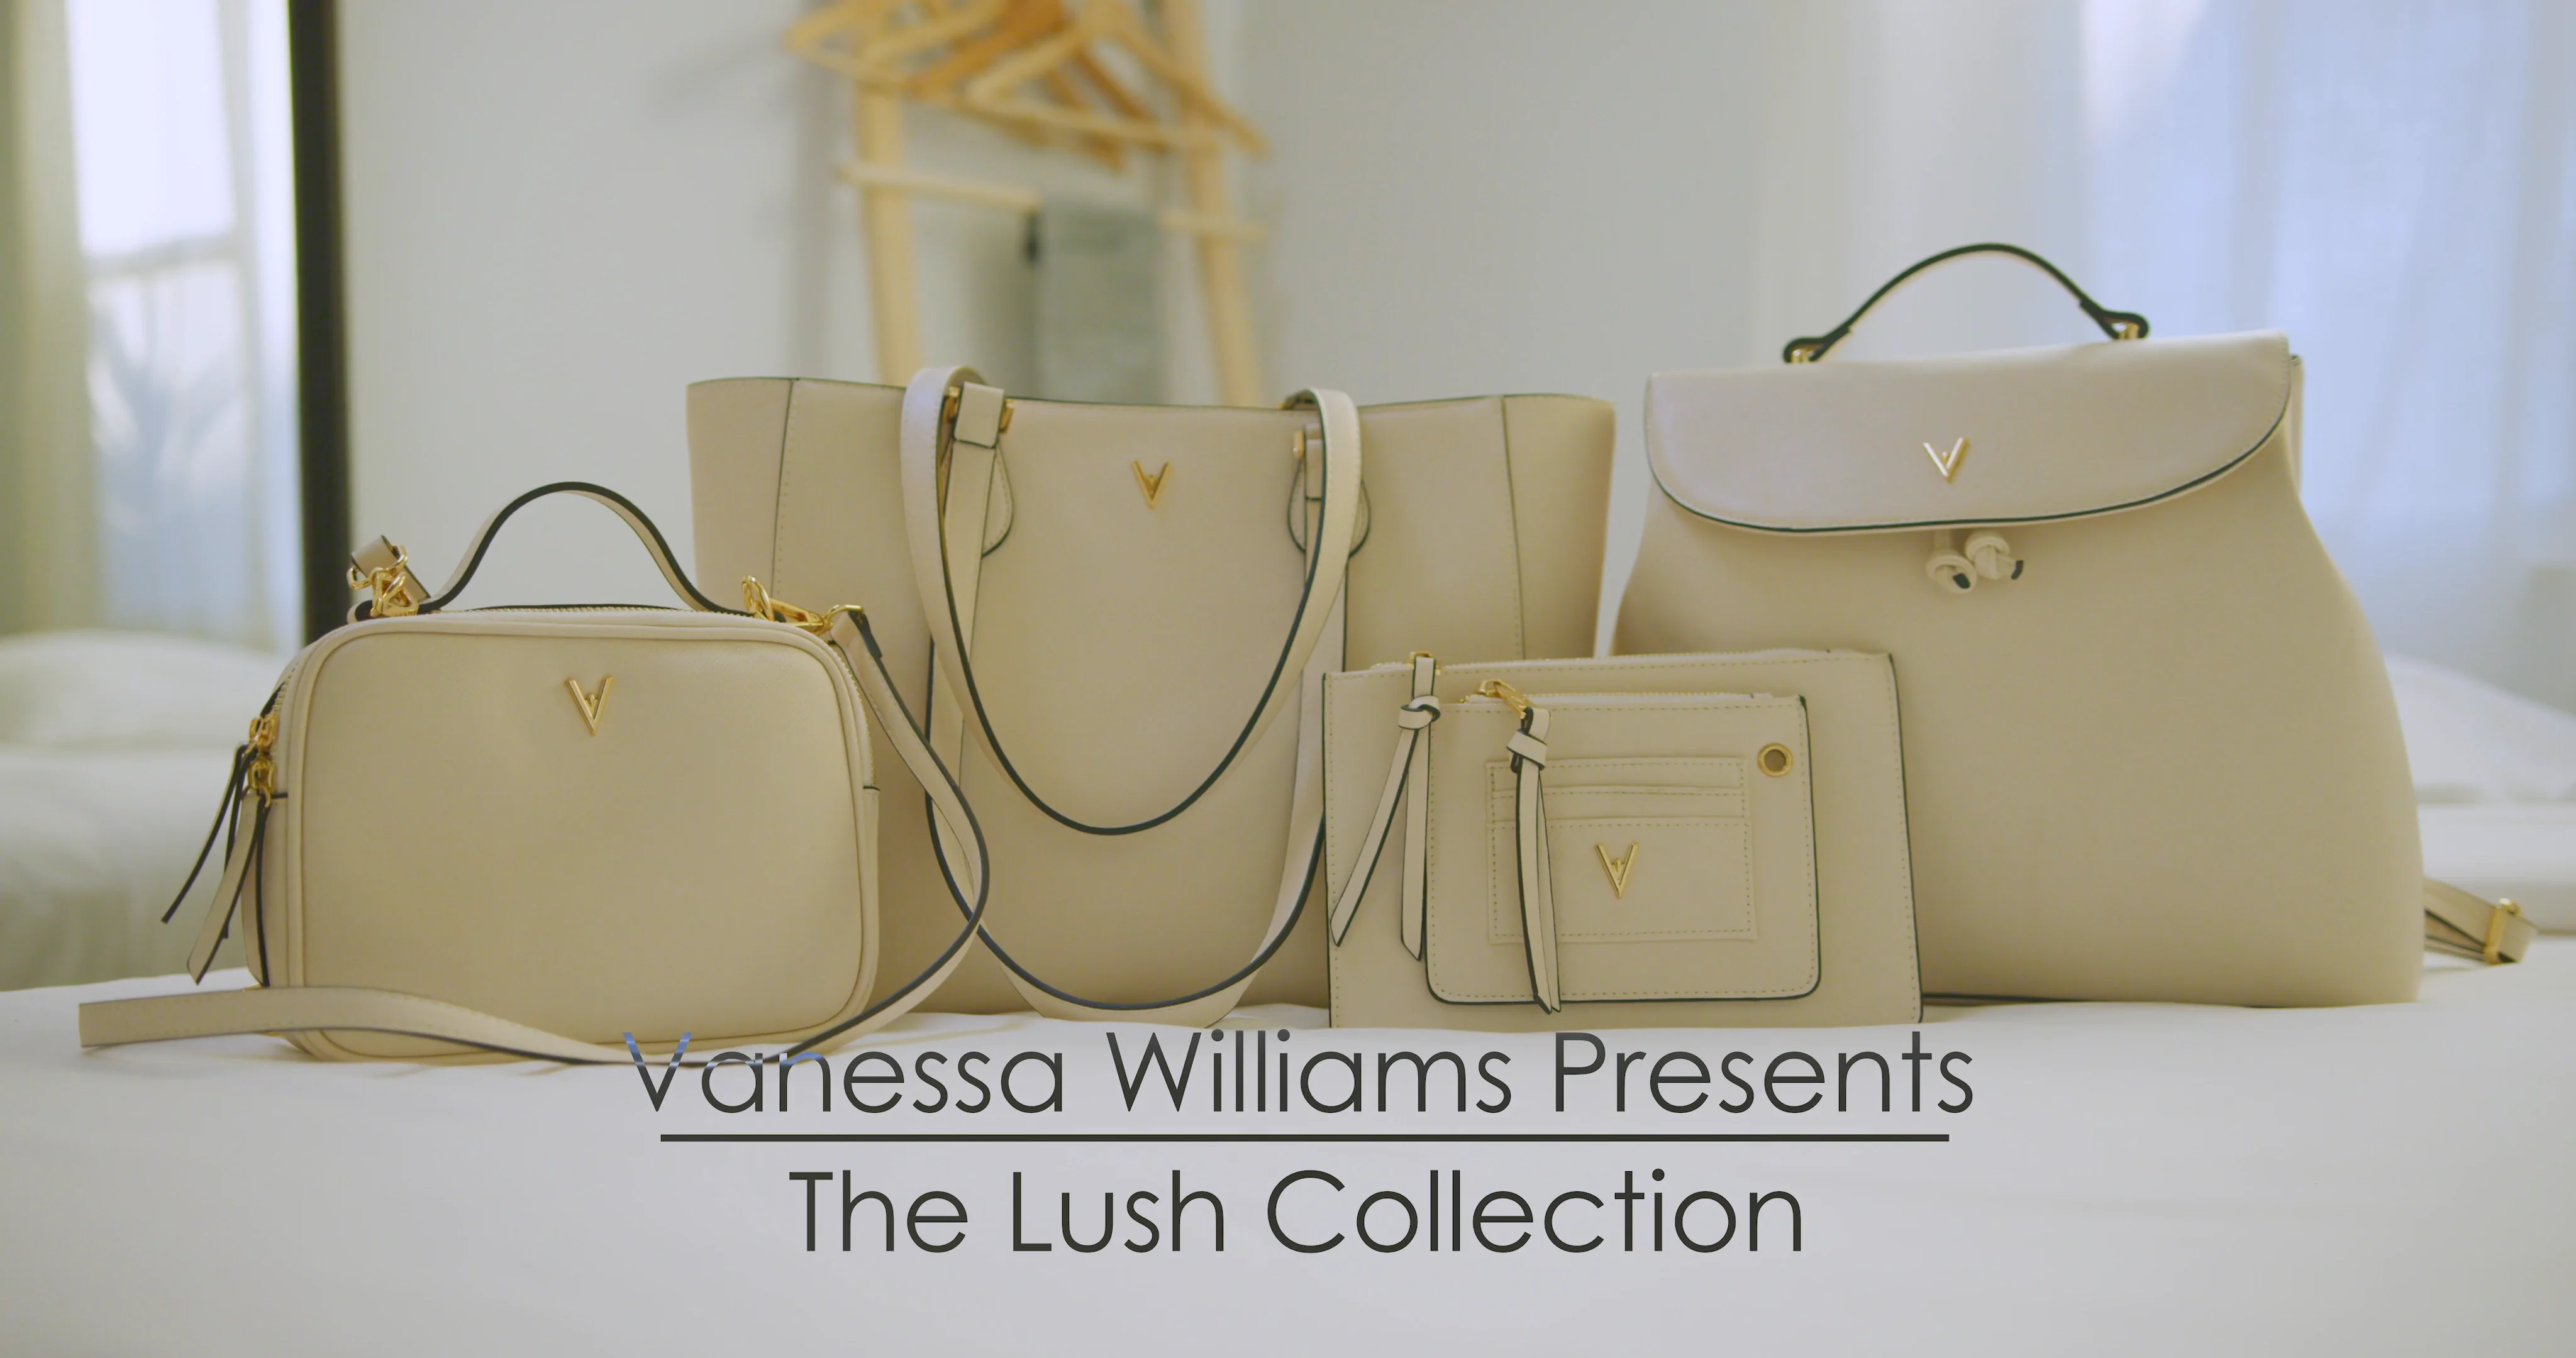 Vanessa Williams - The Lush Collection - Gander Group on Vimeo